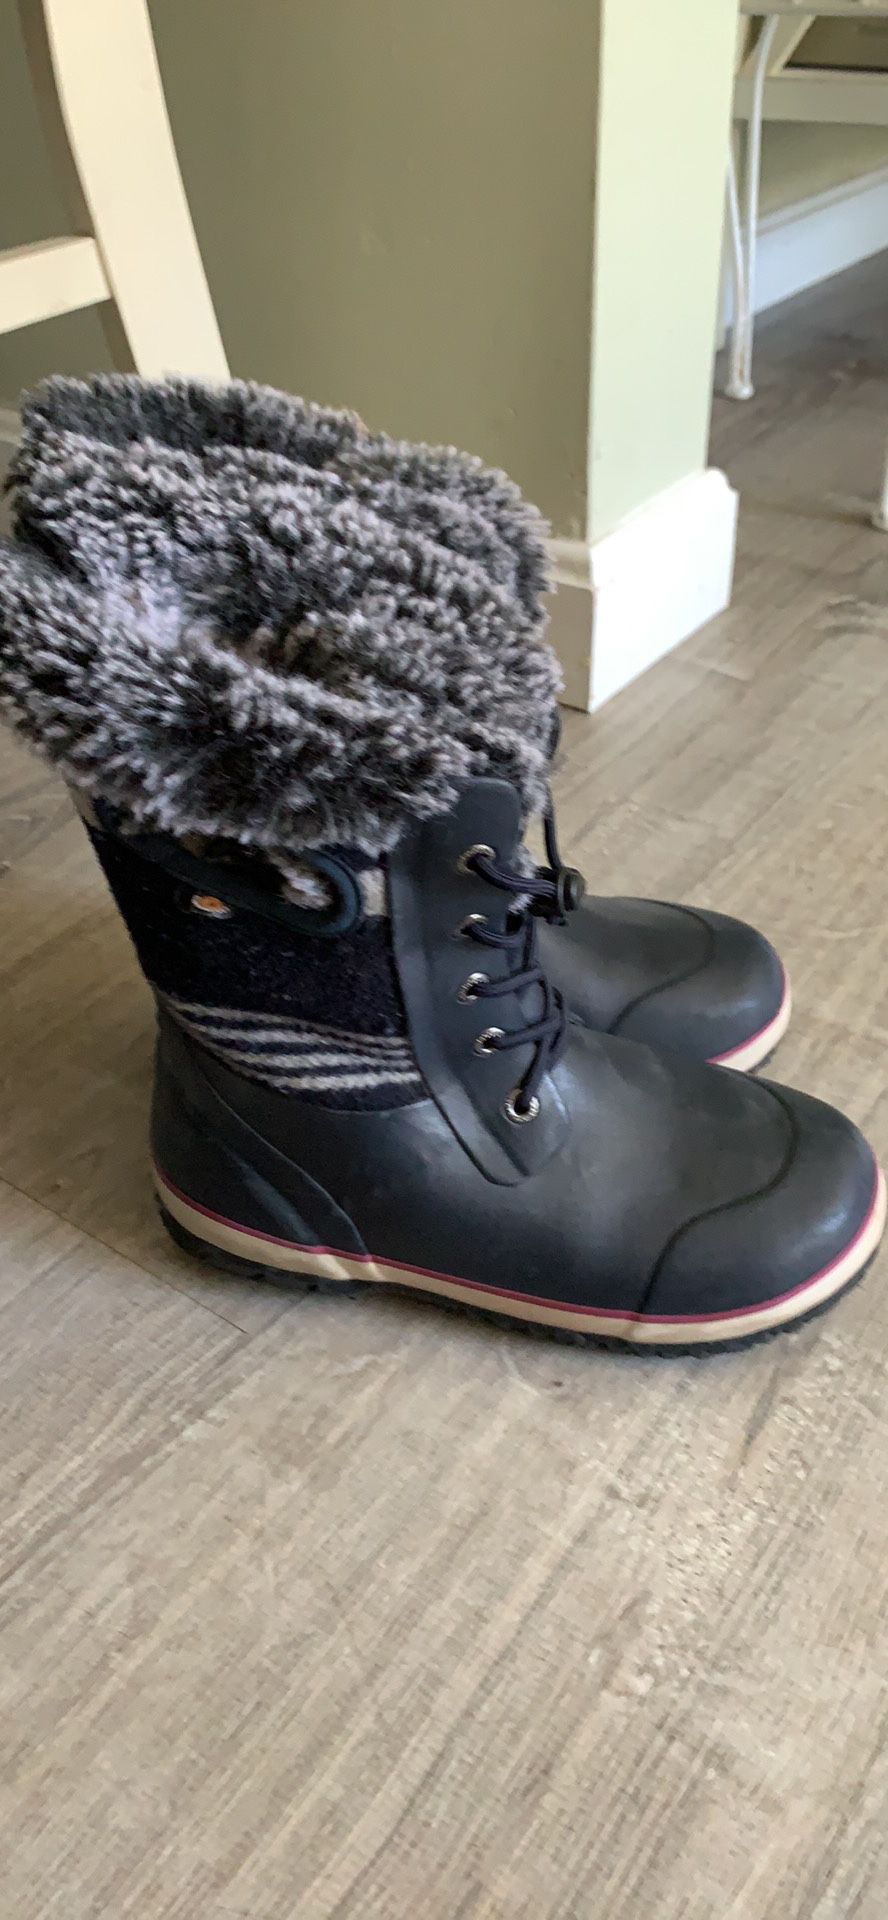 L.L Bean Girls winter snow boots size 4